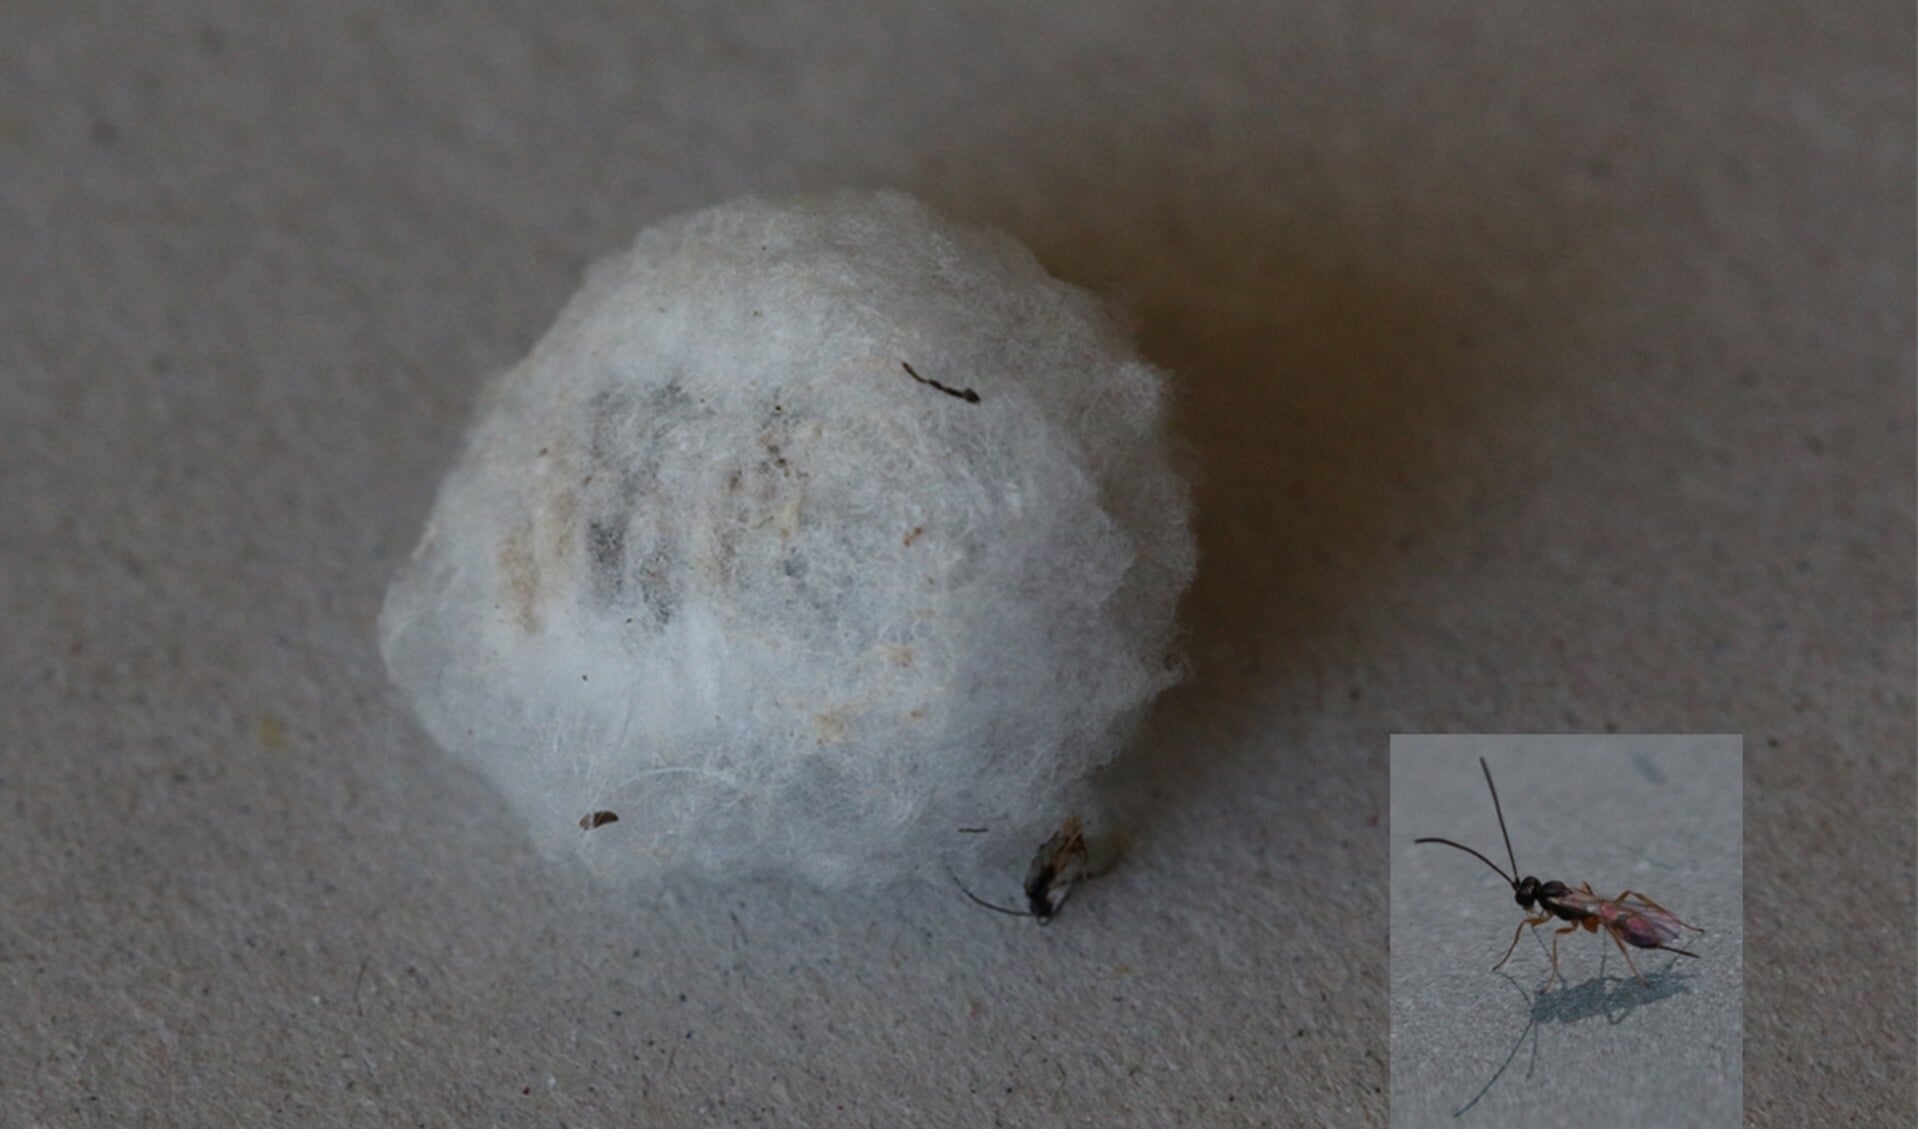 Pluizig bolletje (ca 2 centimeter) vol sluipwespen (ca 3 millimeter). Foto: Caroline Elfferich